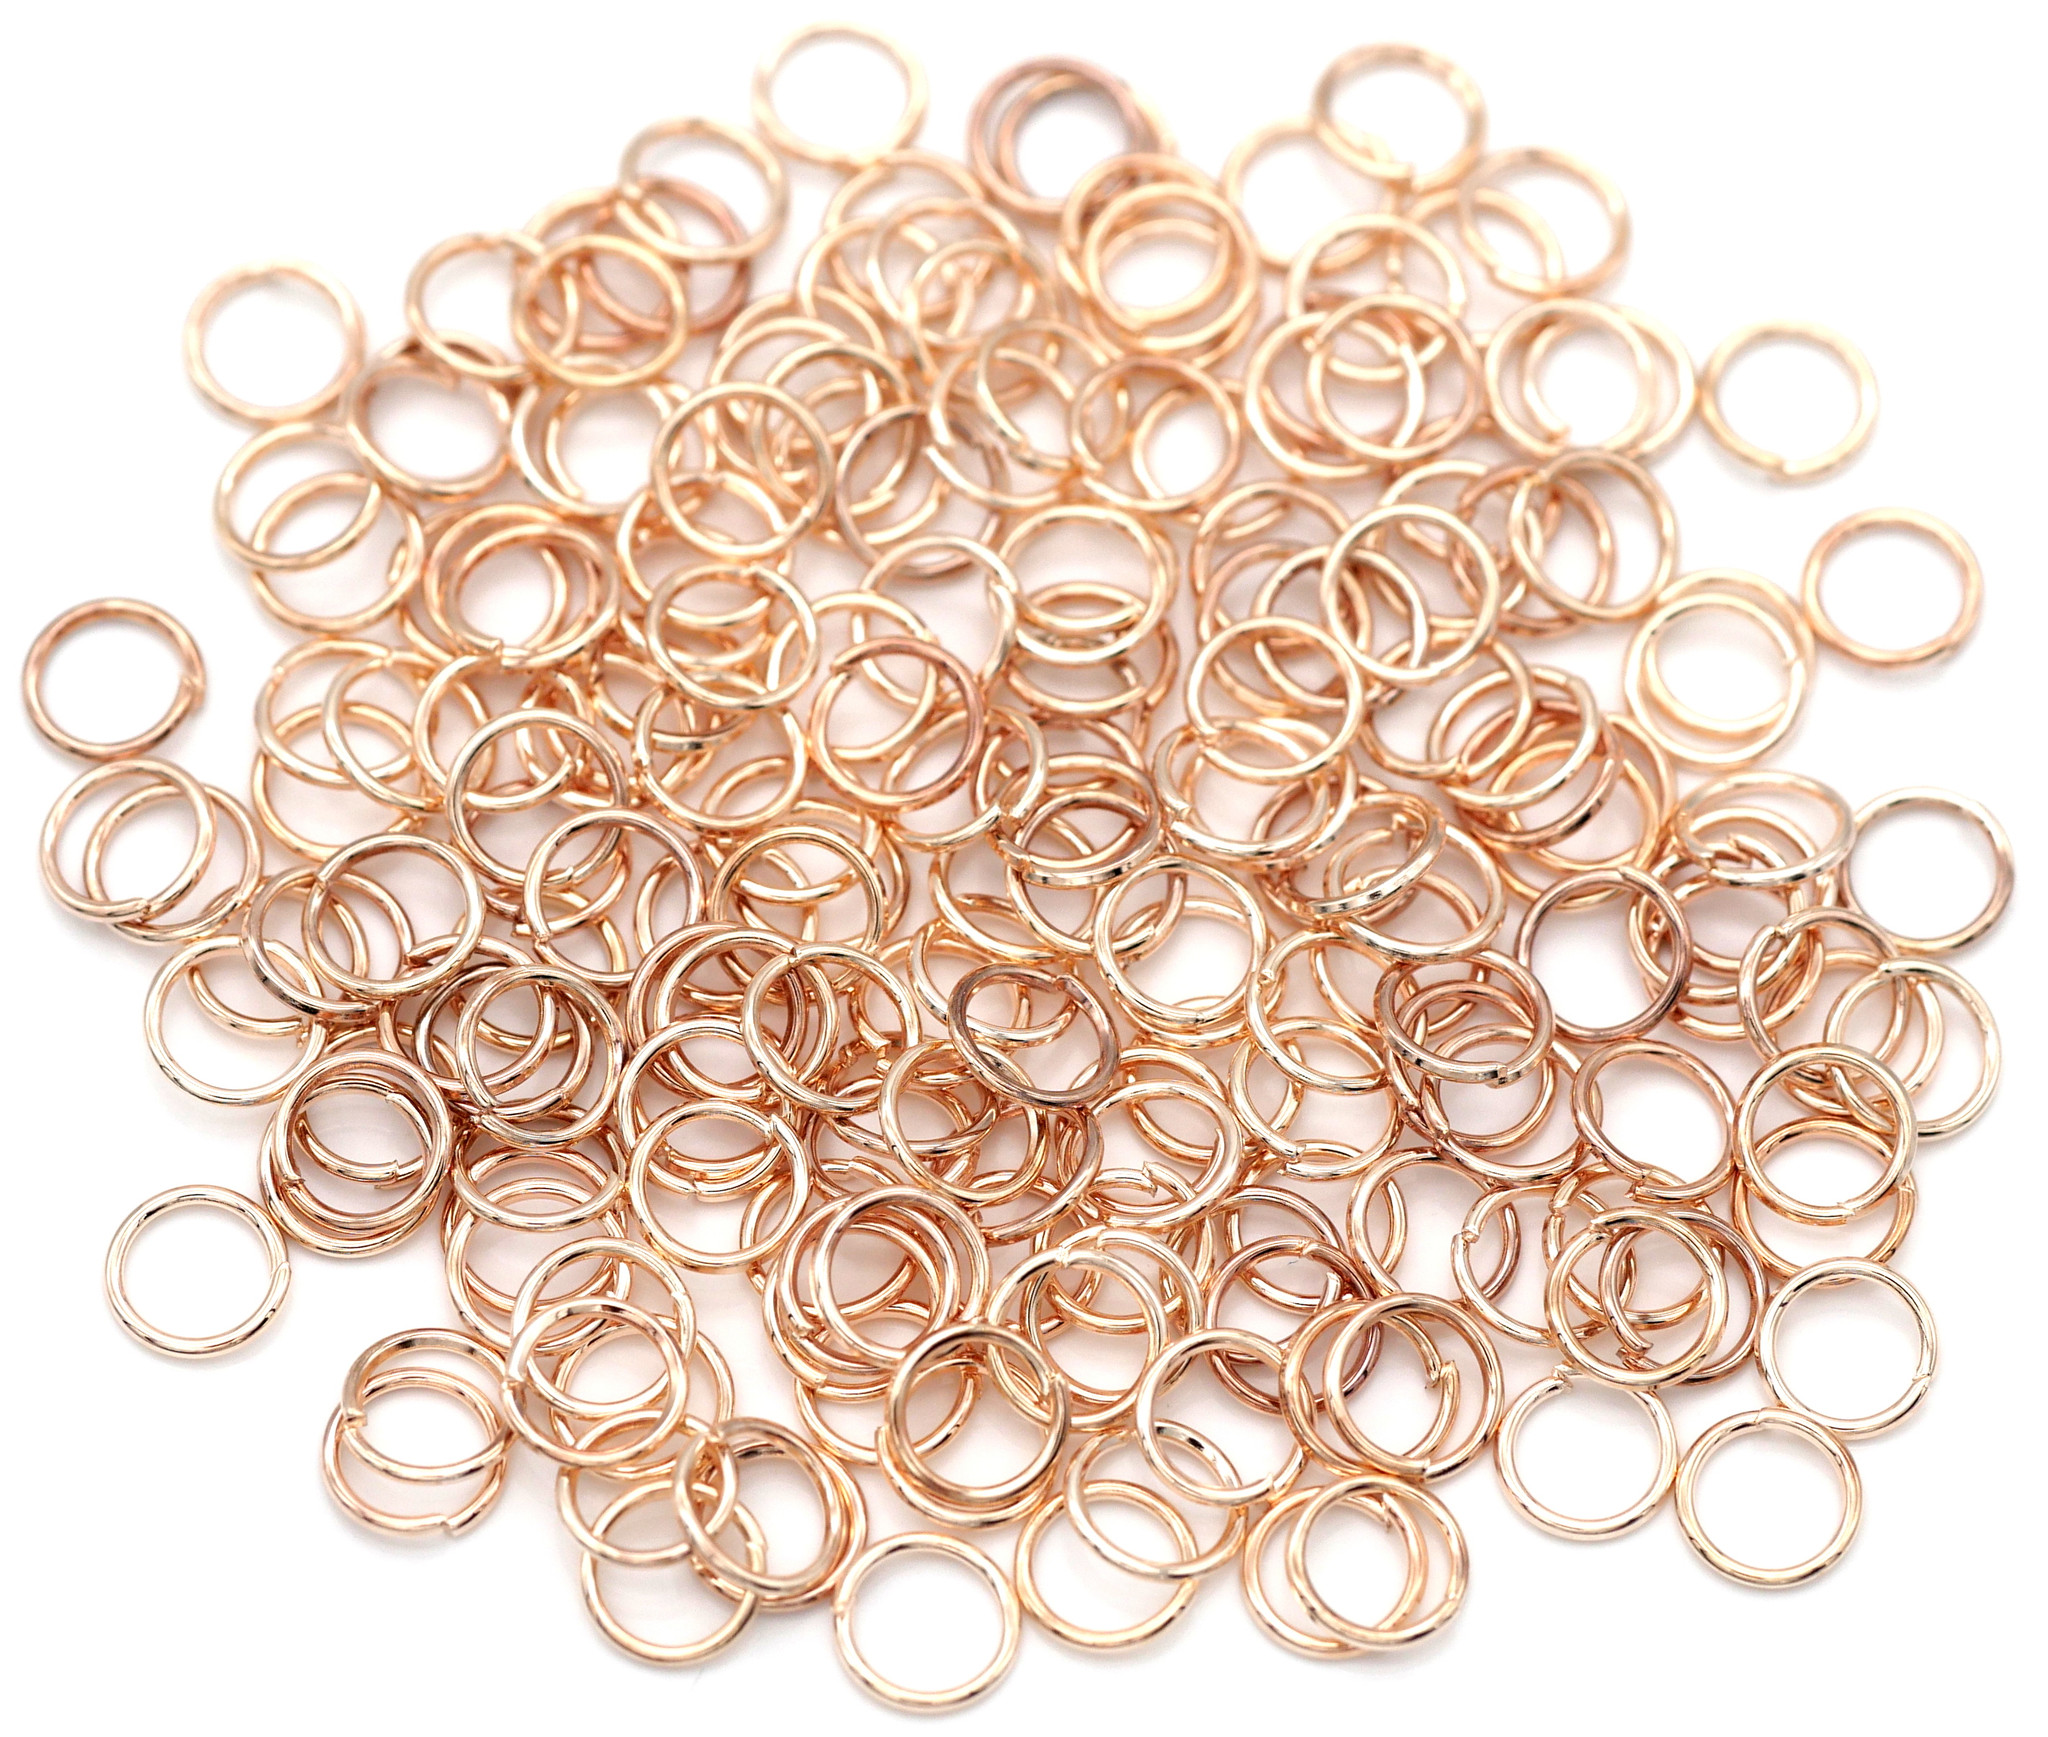 10-Gram Bag of 6mm 21-Gauge Steel Jump Rings, Rose Gold - Bead Box Bargains